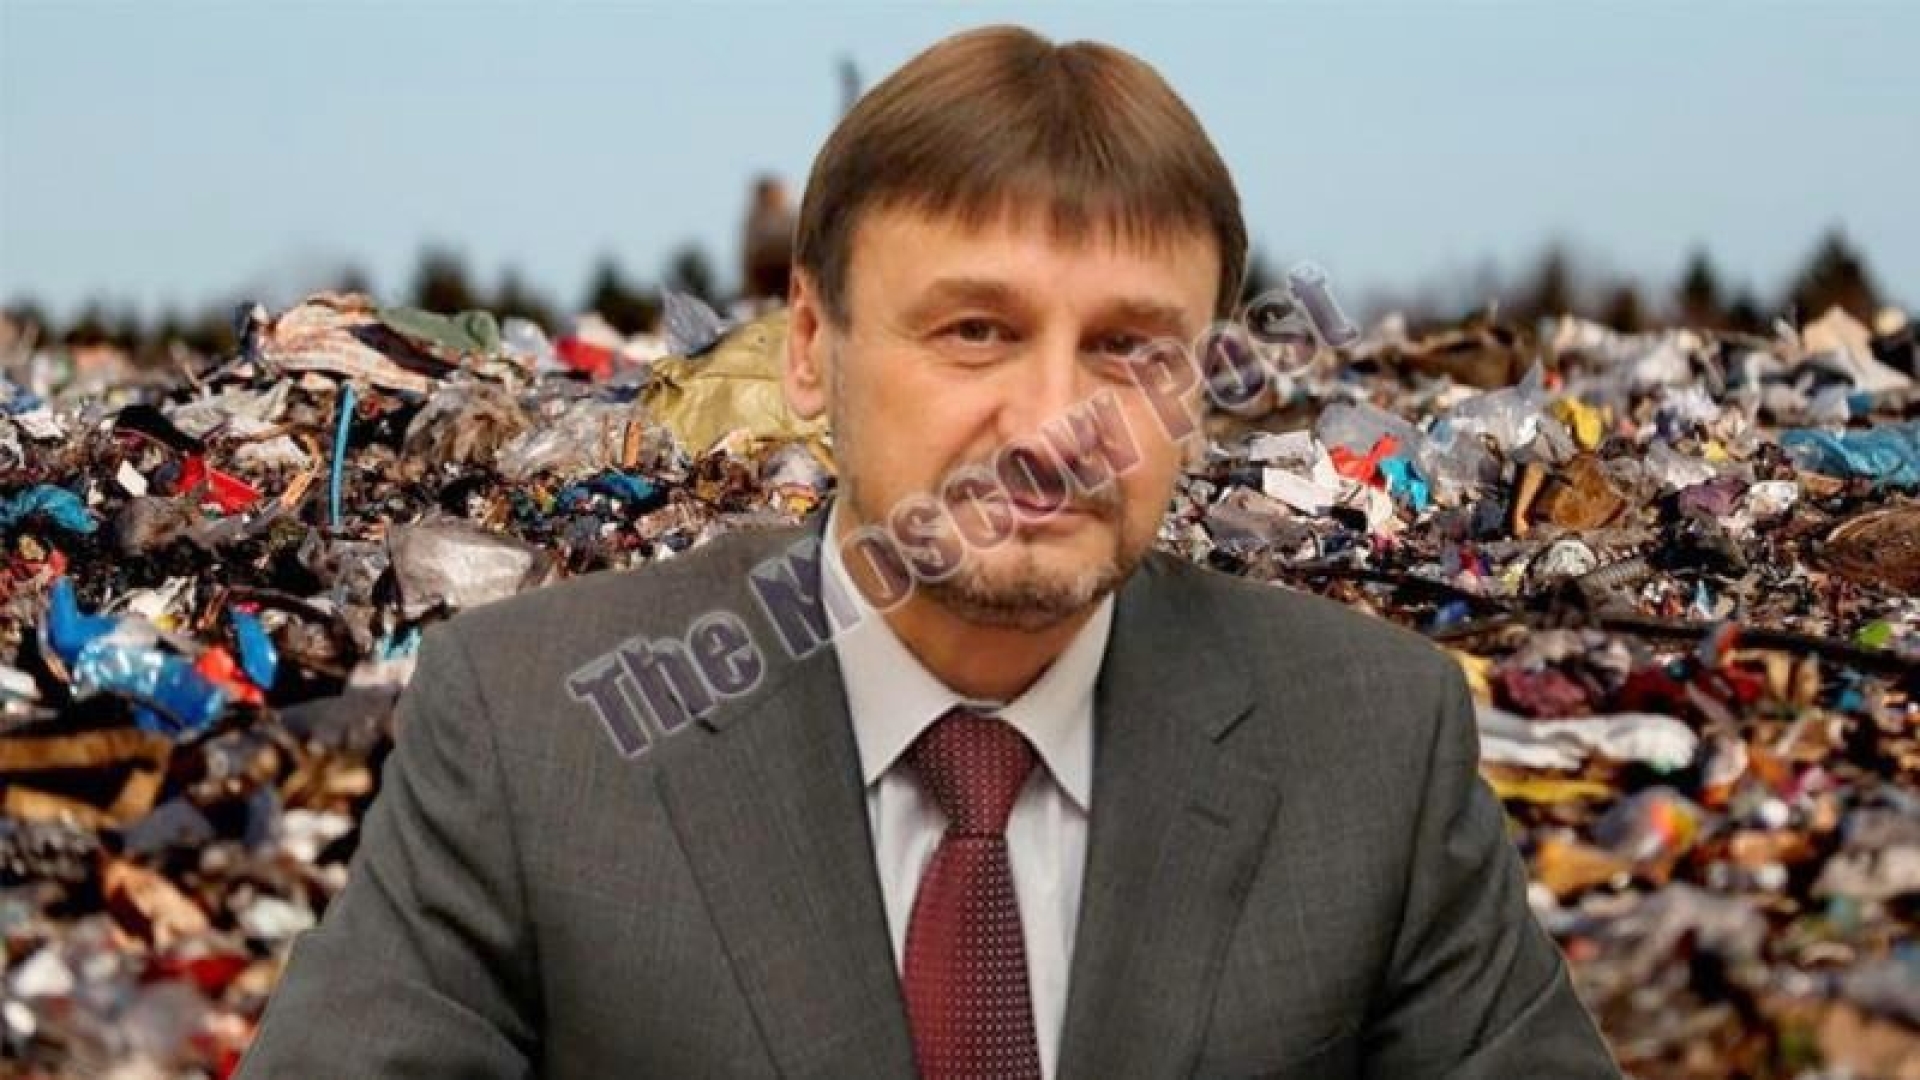 Does Kiriyenko filter the "waste" through Lebedev?